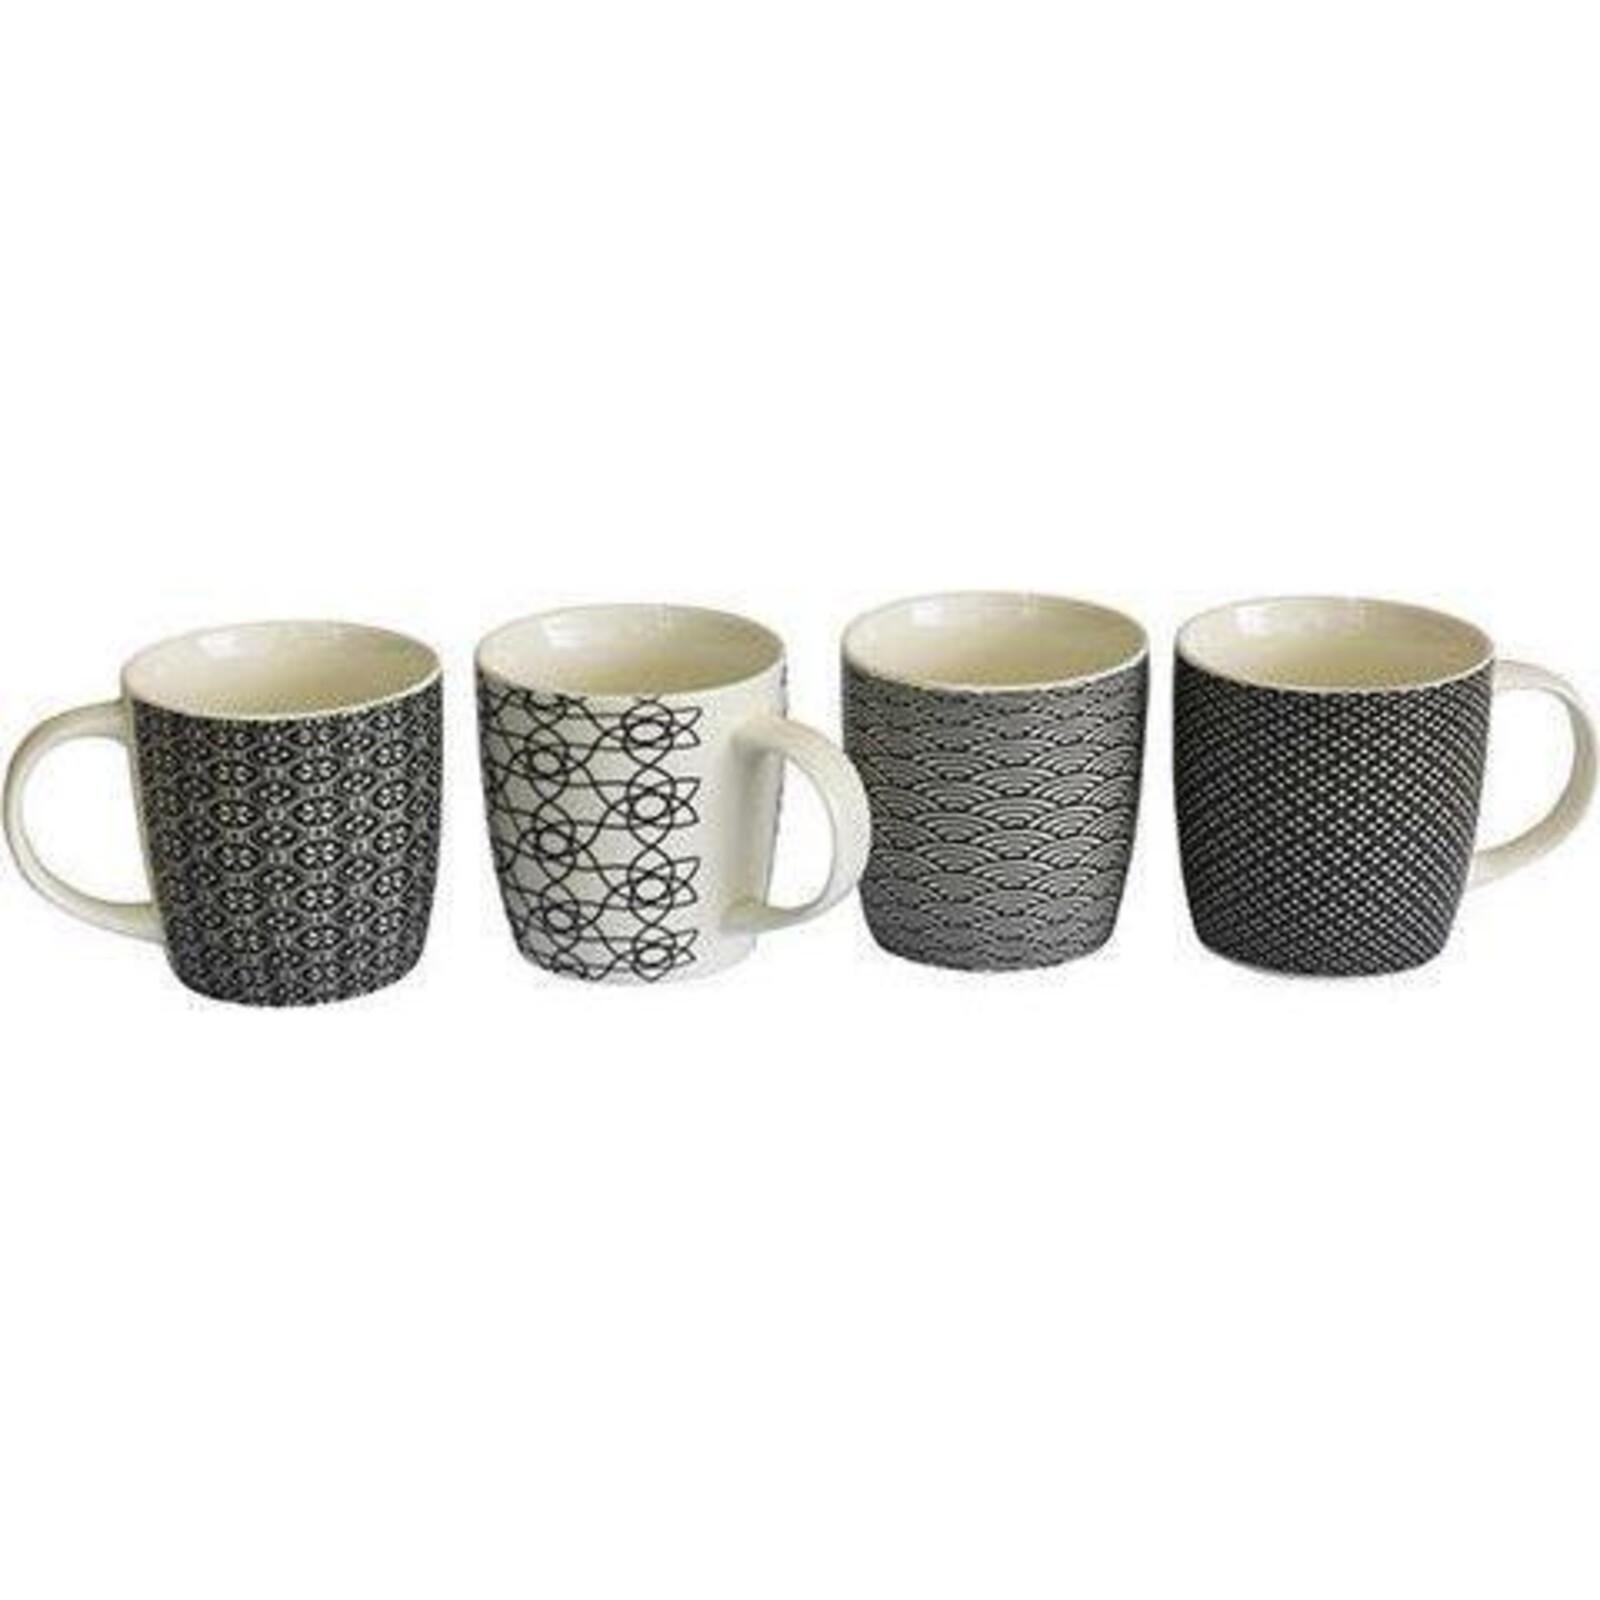 Coffee Mugs Pattern Black Retro 4 asst